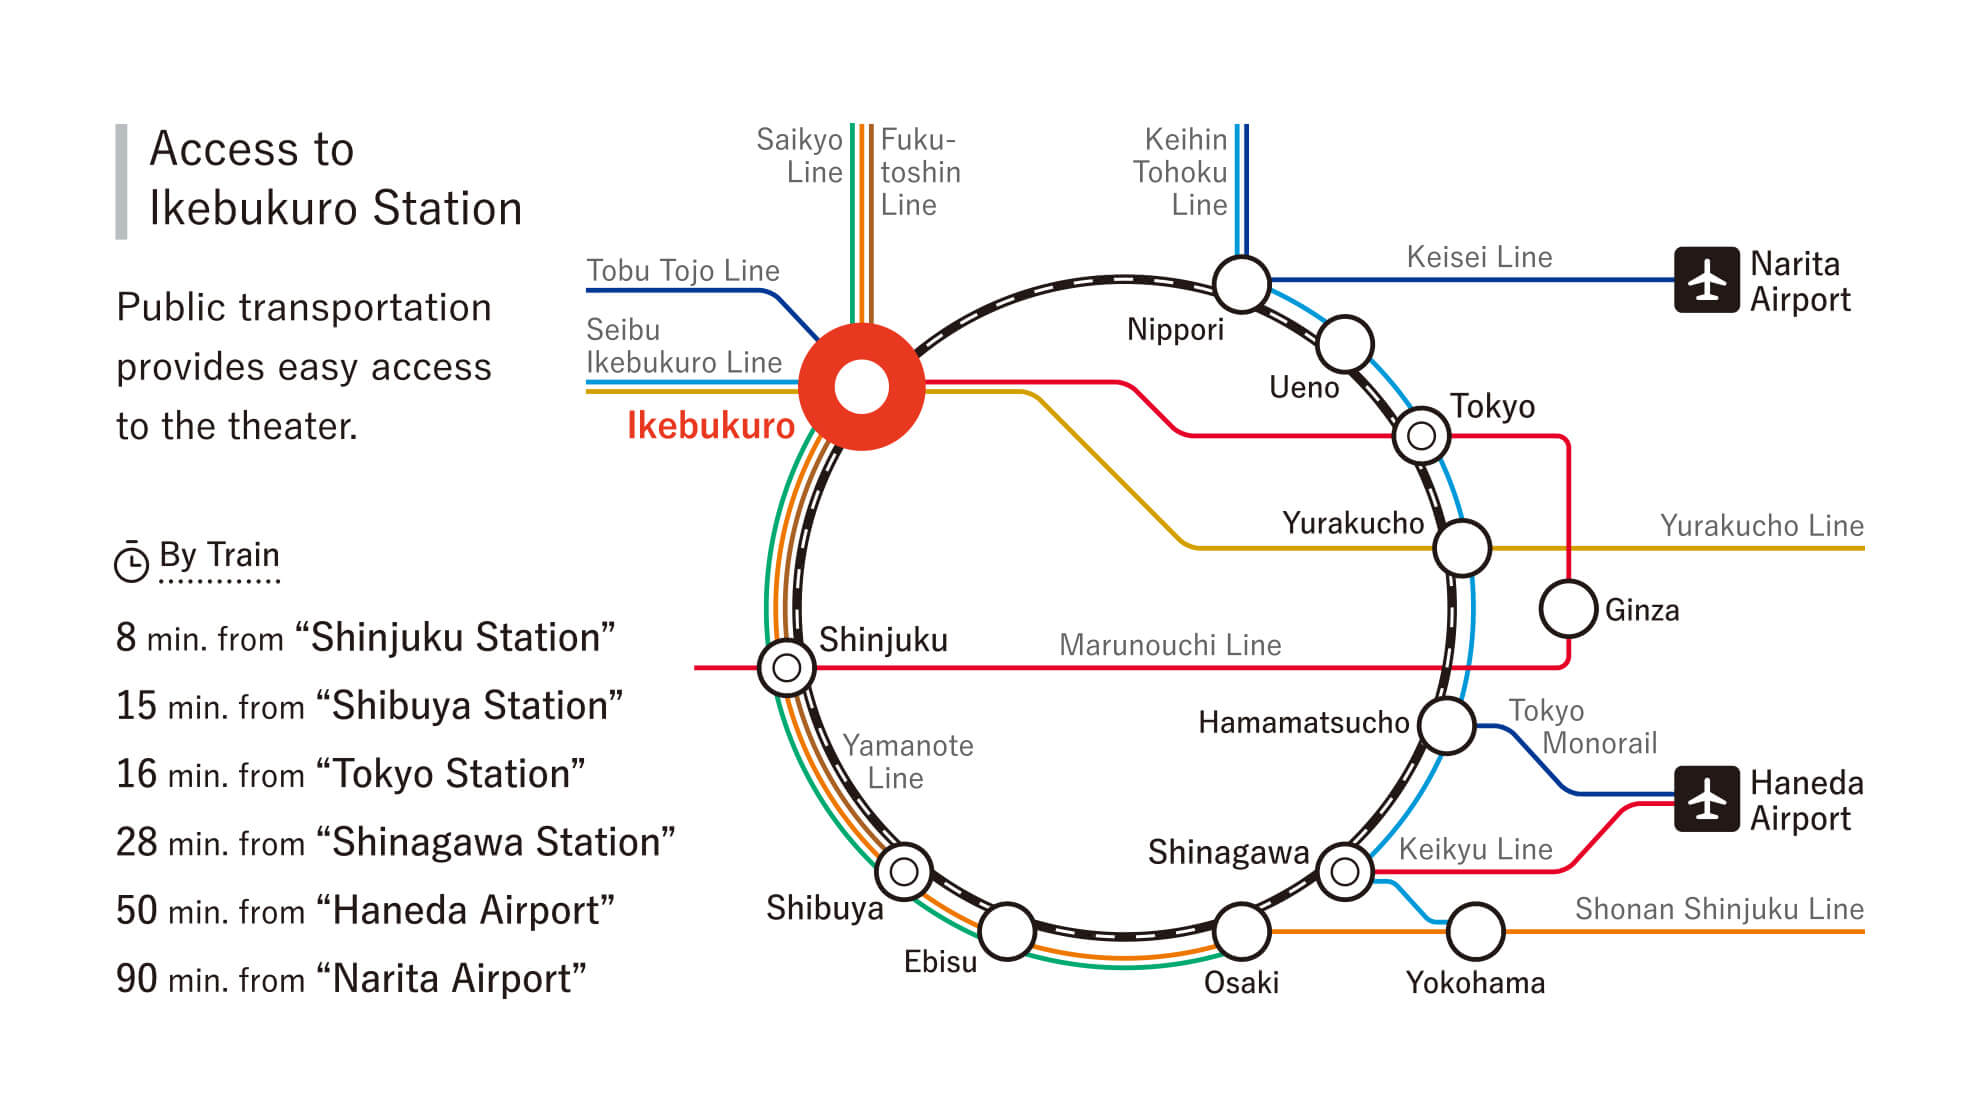 Access to Ikebukuro Station